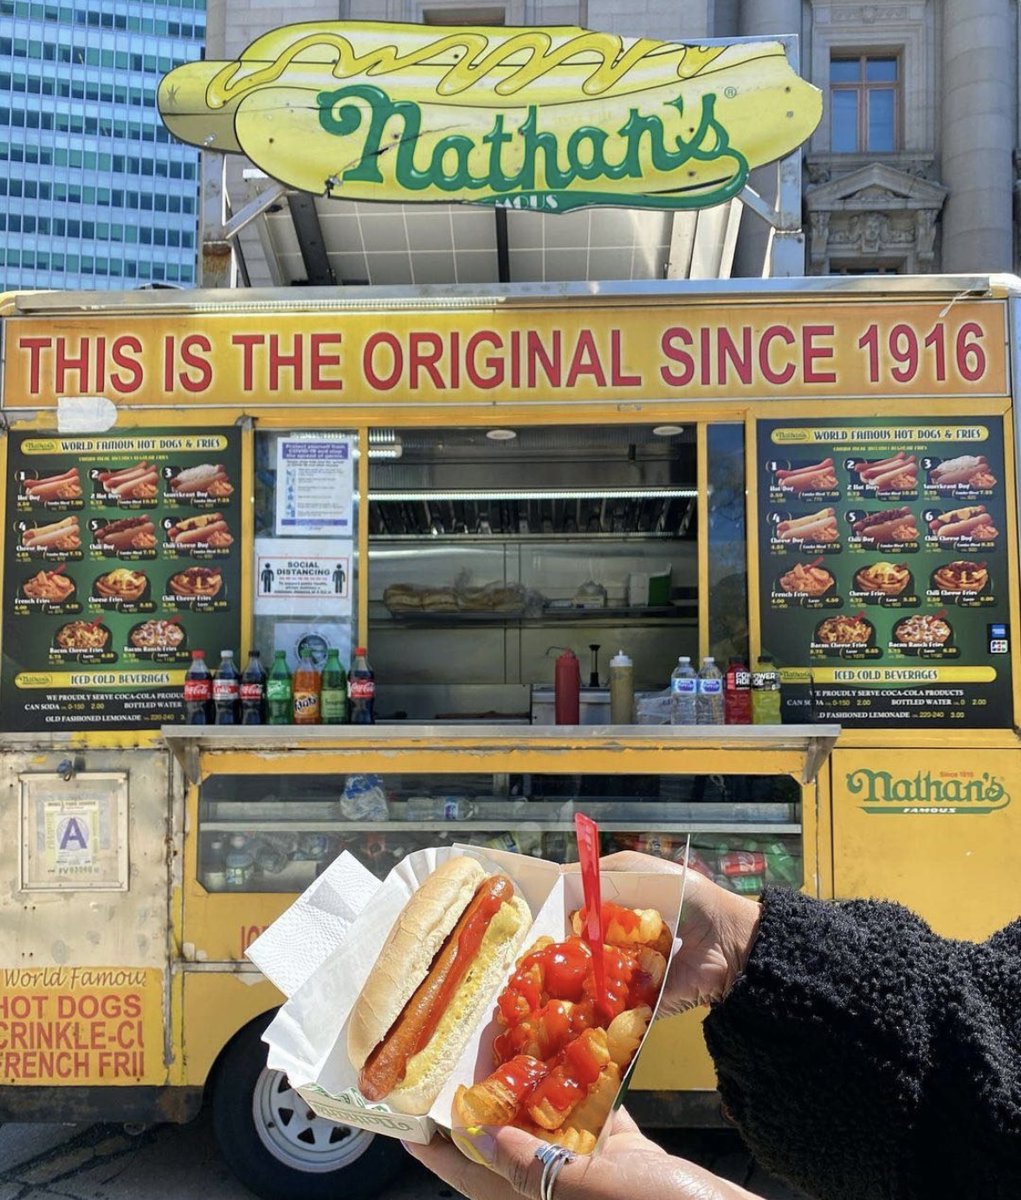 Grab a dog to go to get you through the week!

#hotdog #fries #ketchup #lunchideas #togo #hotdogcart #nyc